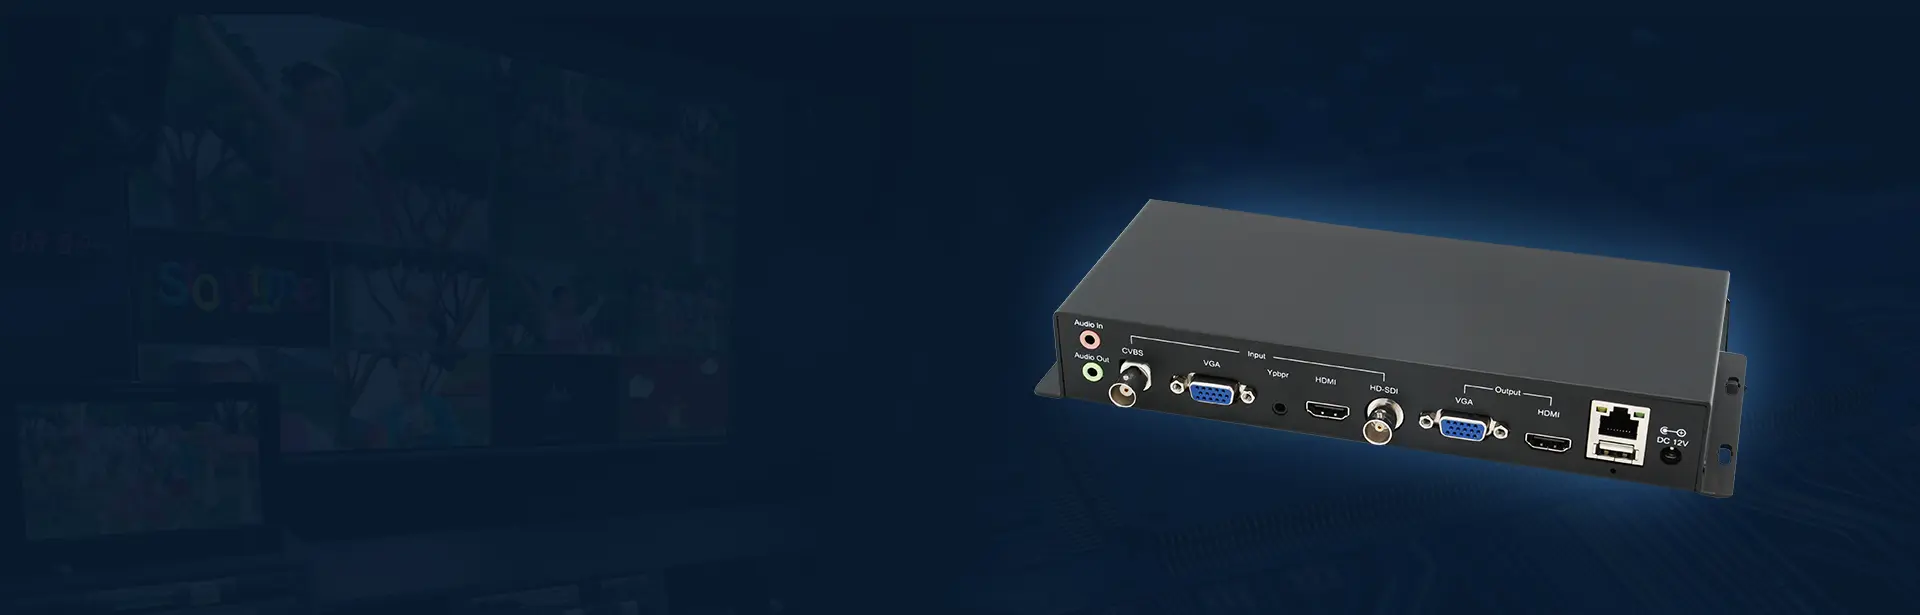 H.264 Multi-interface Video Encoder For IPTV, Live Stream, Broadcast